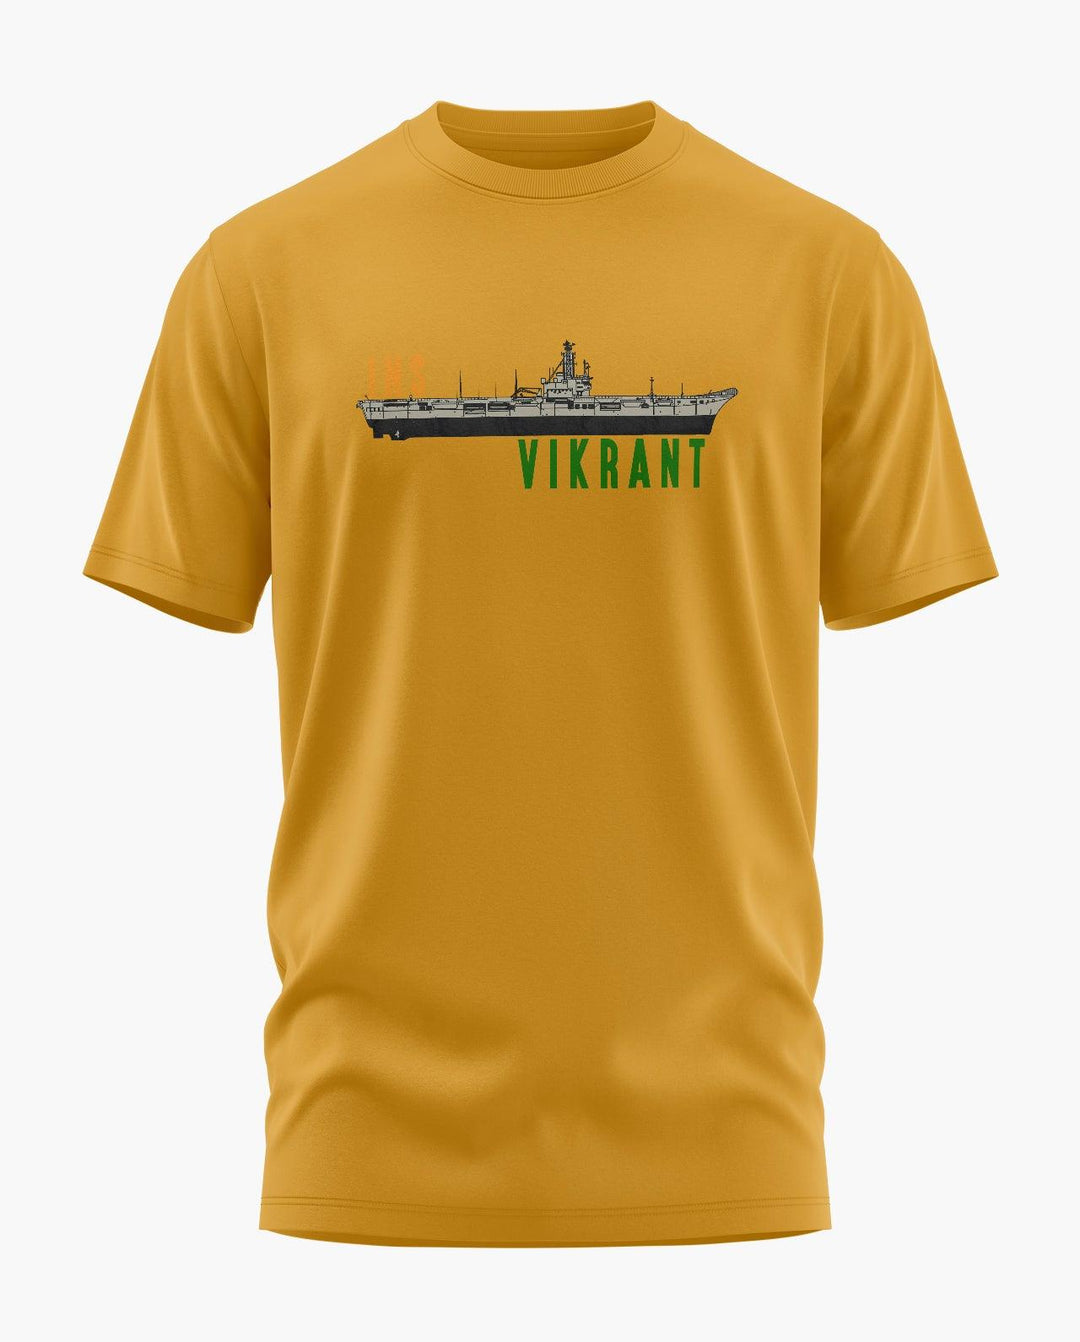 INS Vikrant Recoloured T-Shirt - Aero Armour